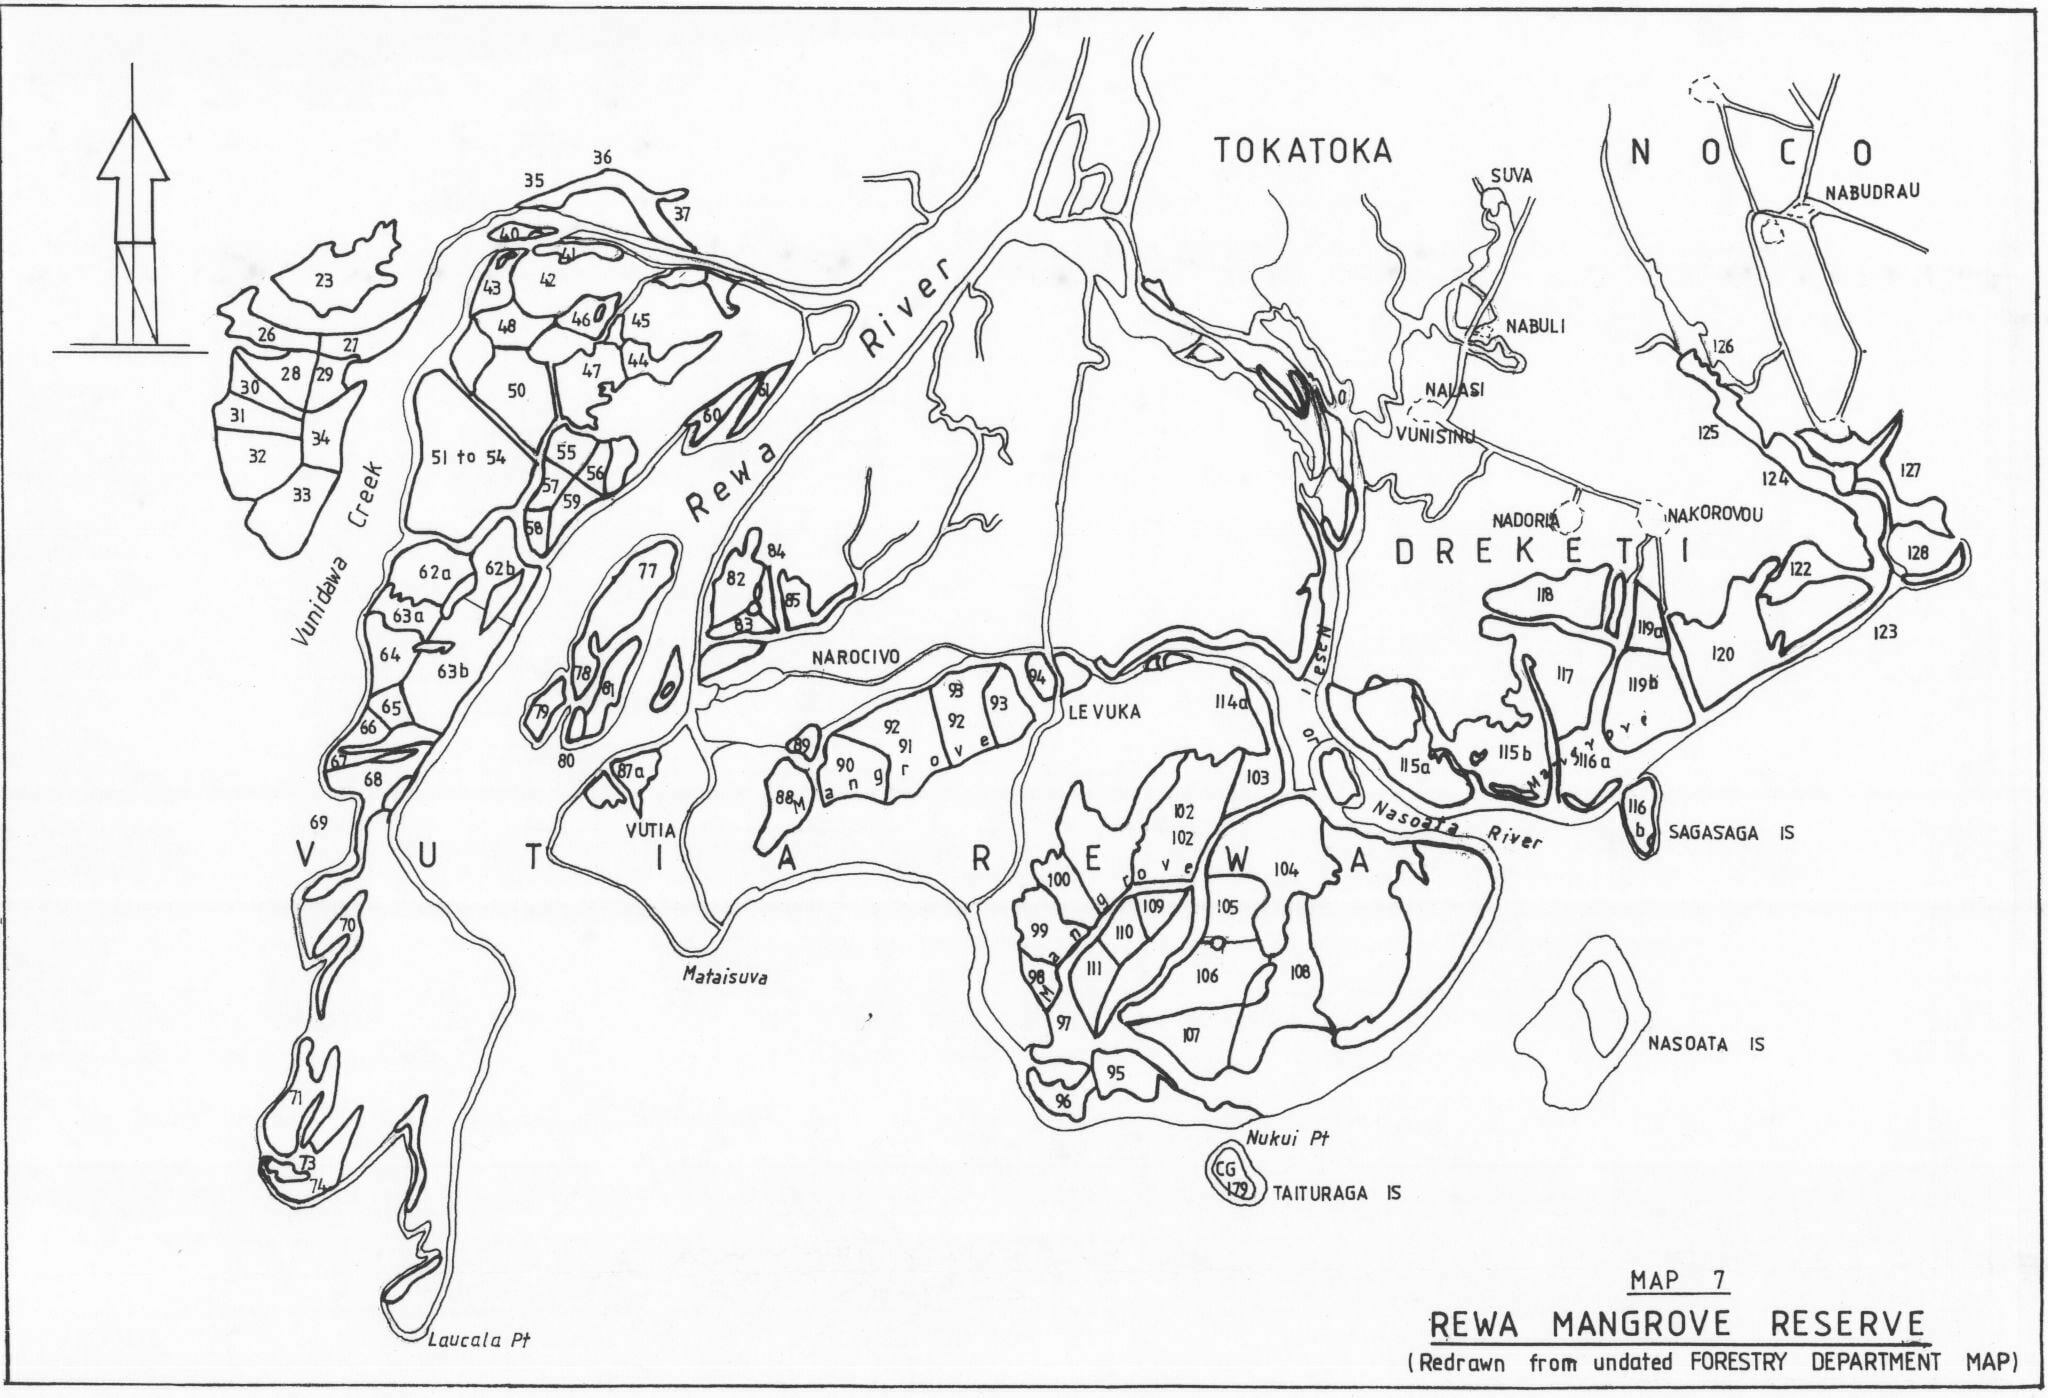 Map-7-Rewa-Mangrove-reserve